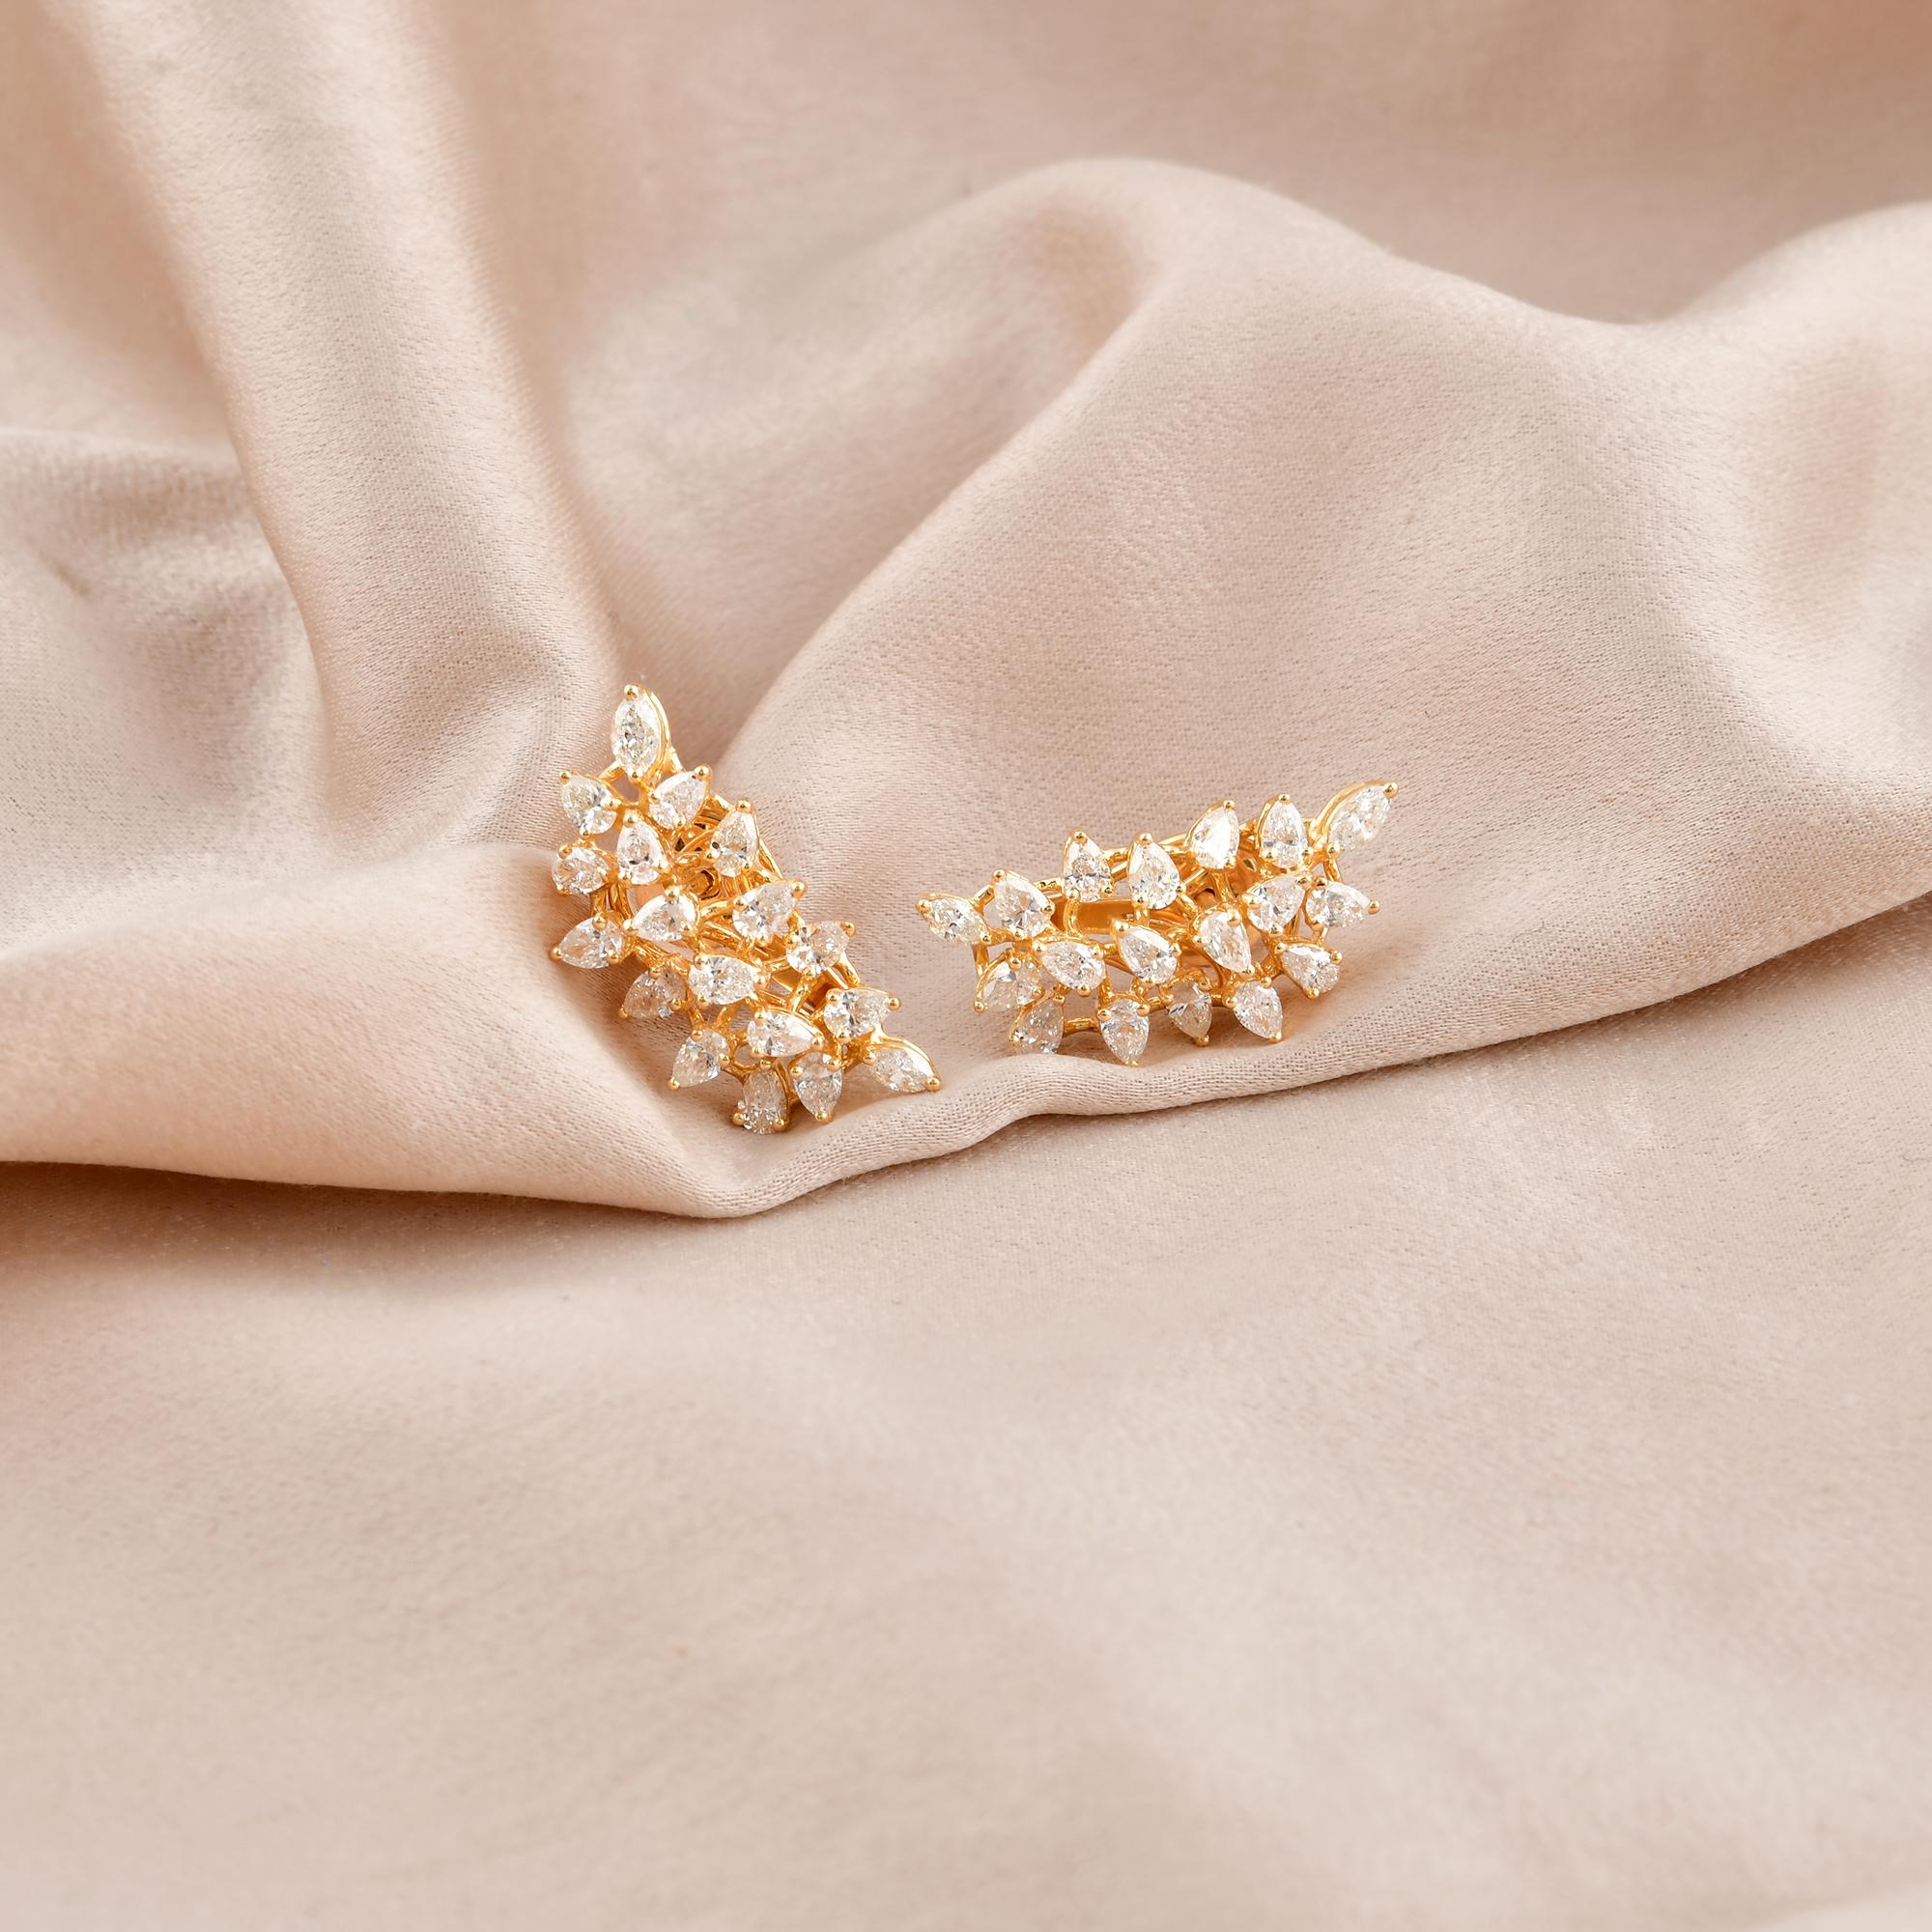 Taille poire 2.9 Carat SI Clarity HI Color Pear Diamond Earrings 18 Karat Yellow Gold Jewelry en vente